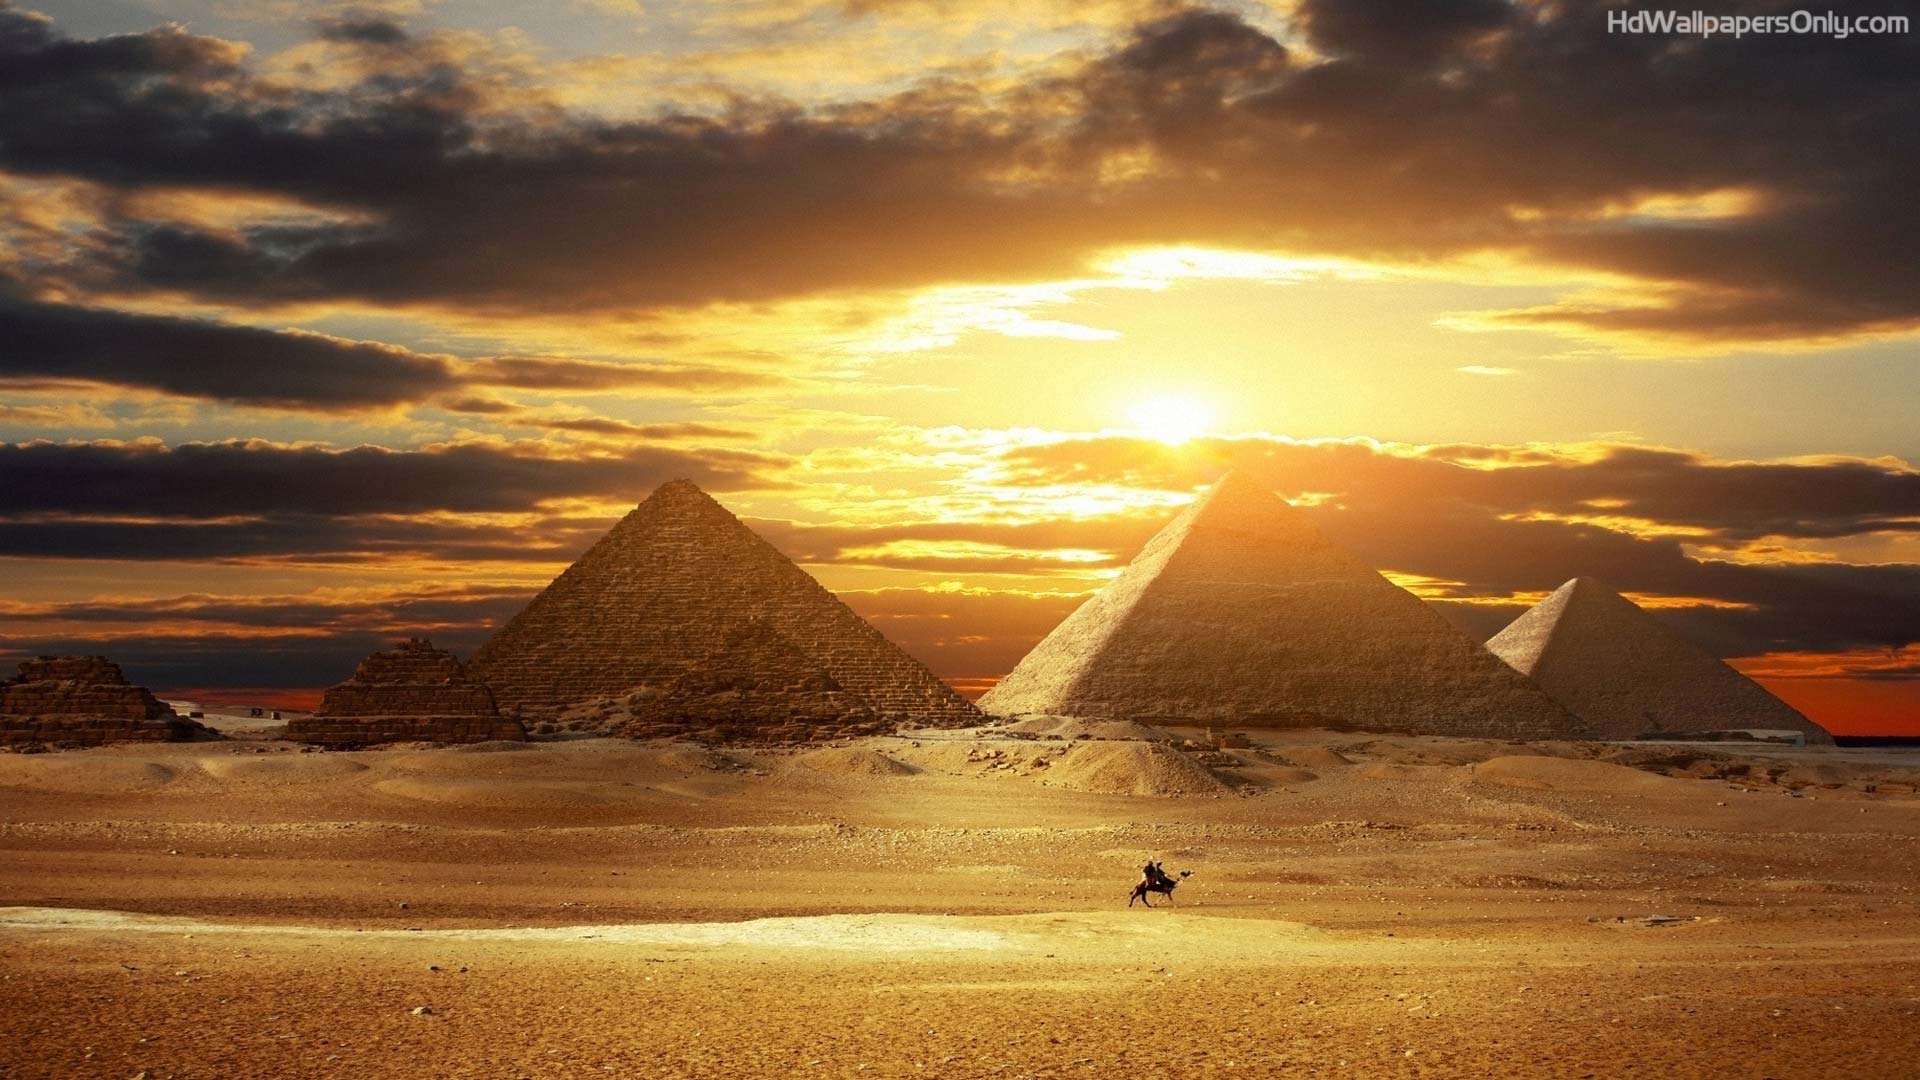 Ancient Egypt Pyramids HD Photo & Wallpaper Pyramids of Egypt.HD